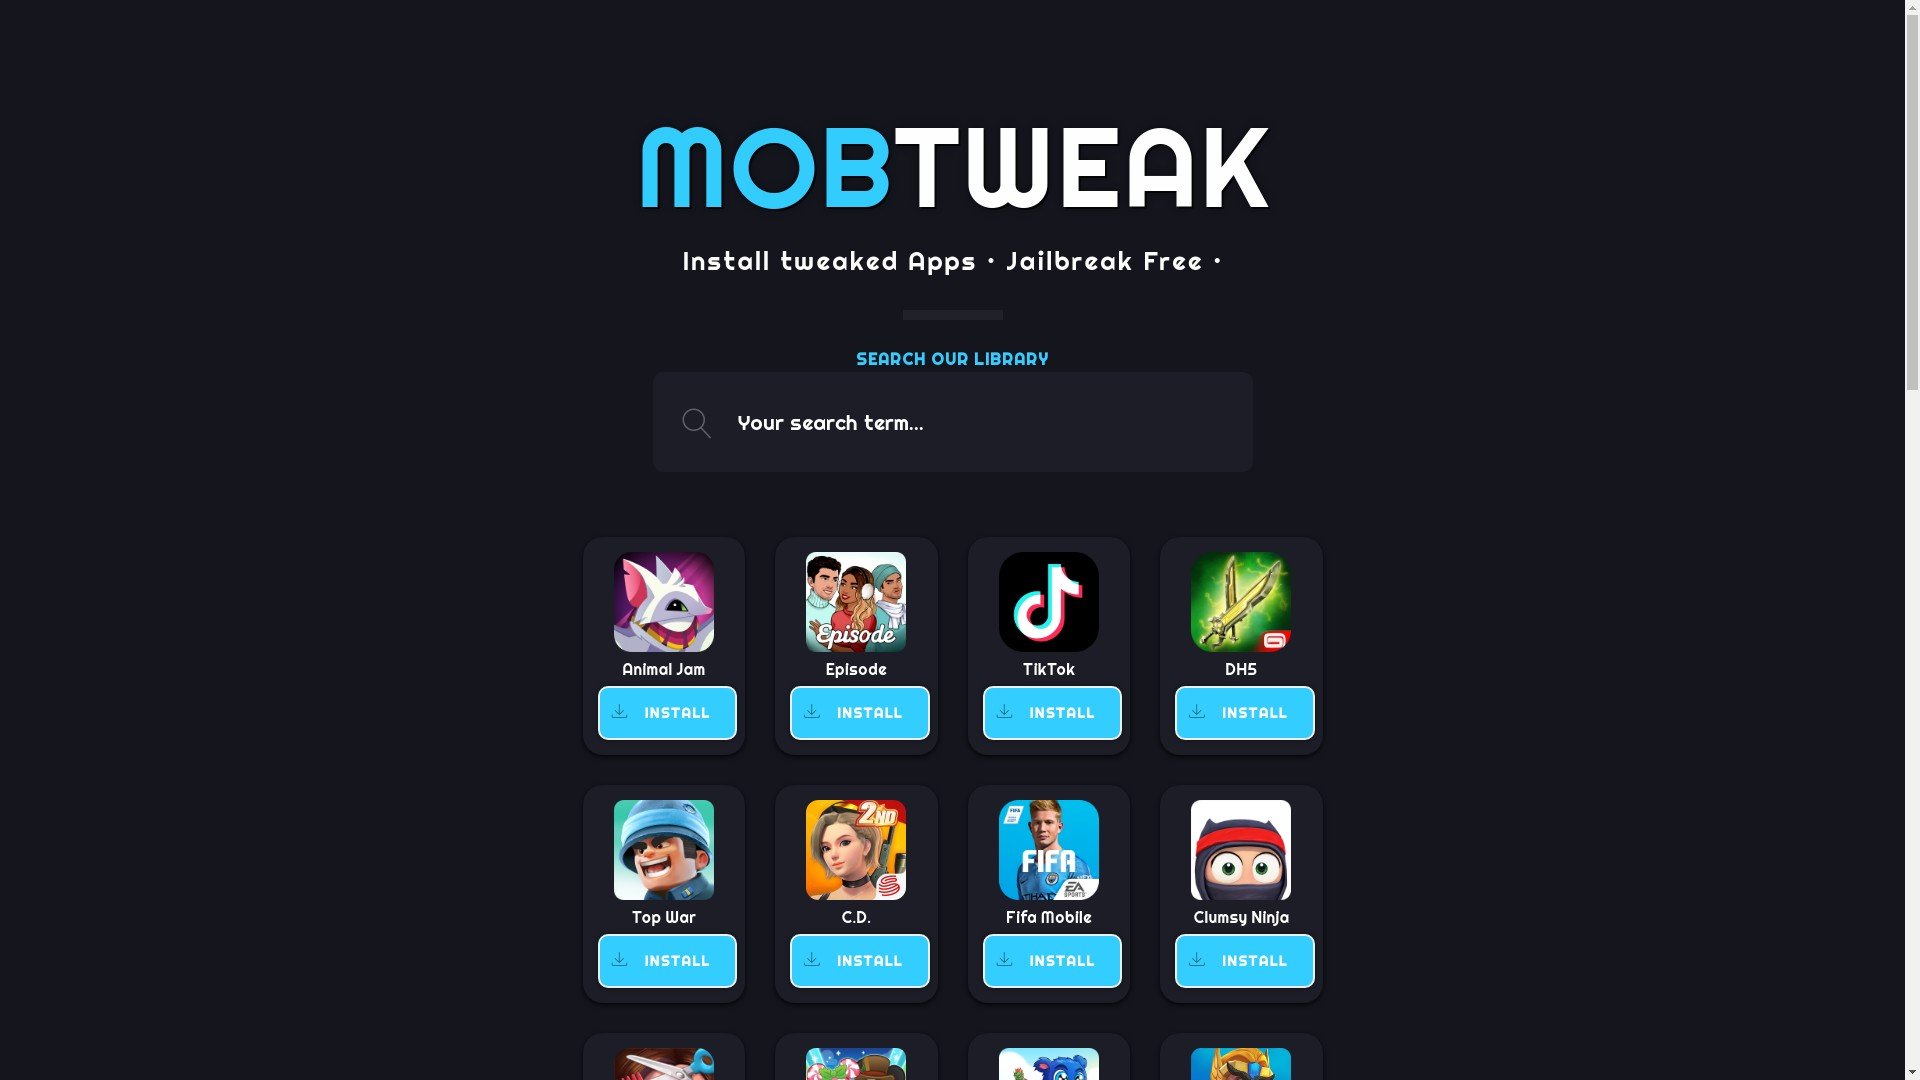 Mobtweak at mobtweak.com